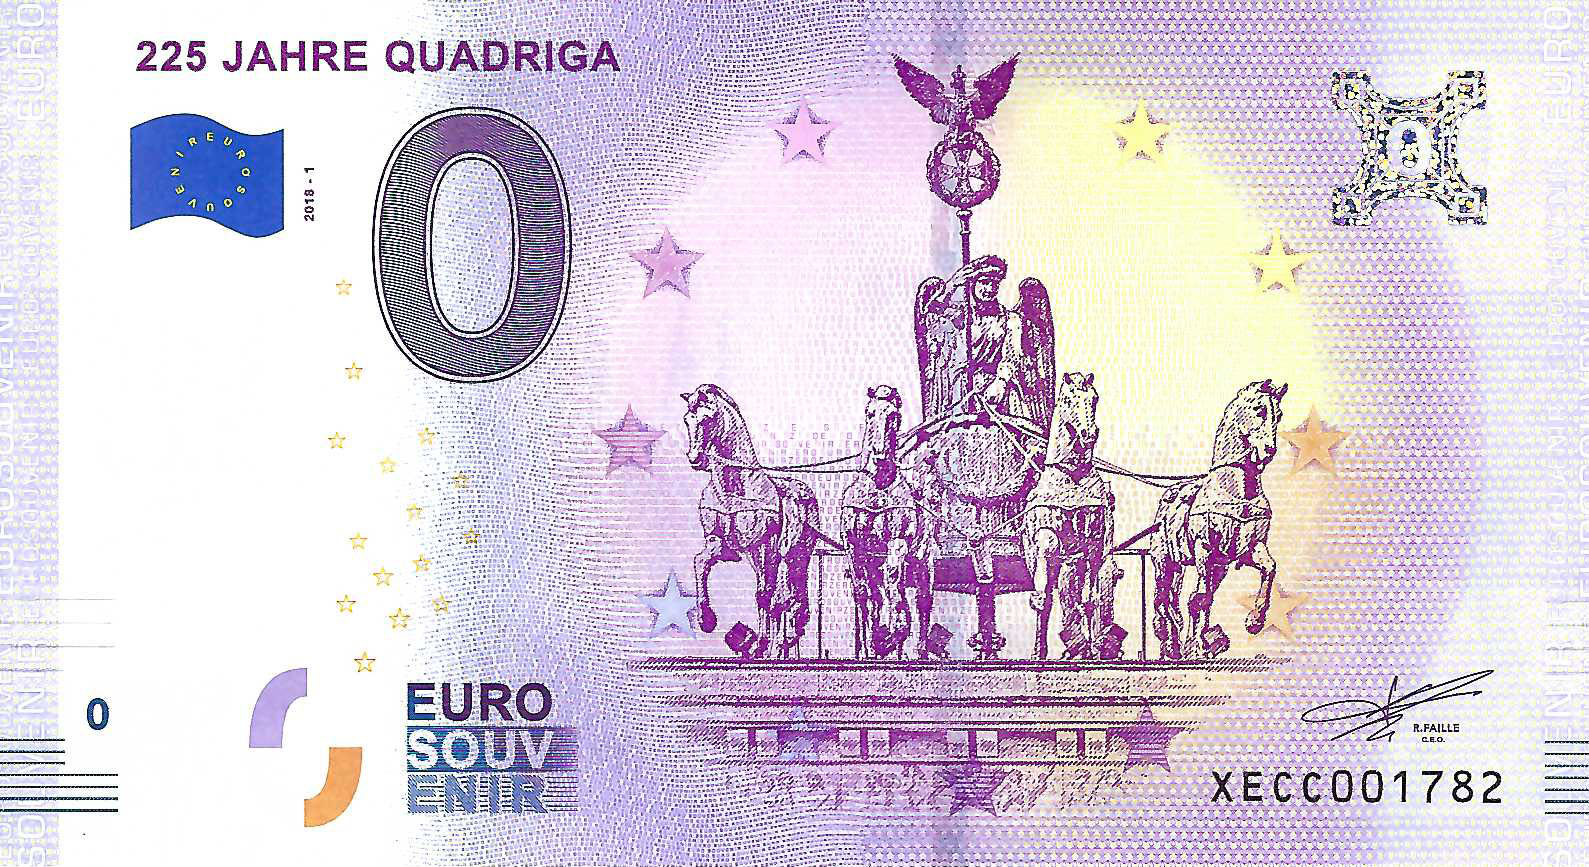 0 Euro biljet Duitsland 2018 - 225 Jahre Quadriga